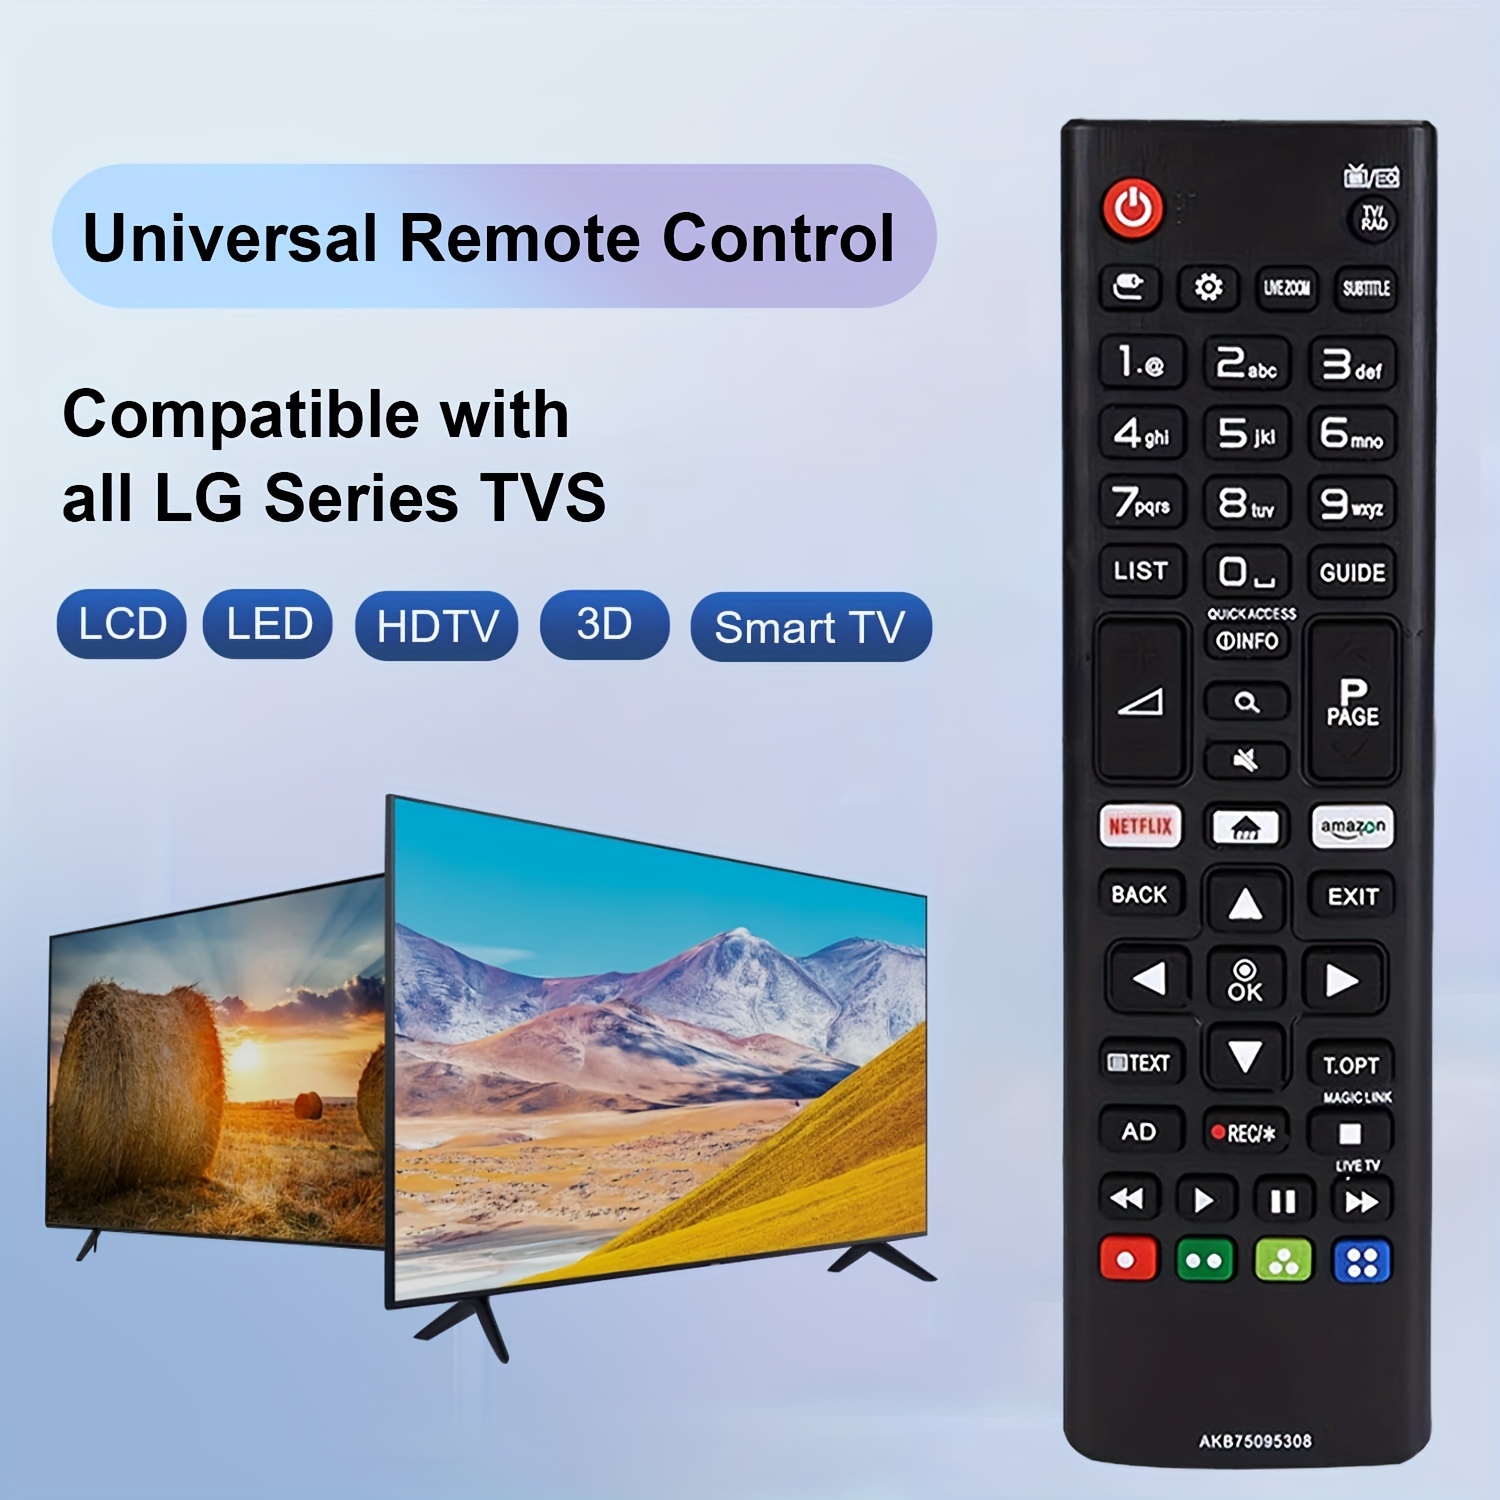 Control Remoto Universal Lg Tv Remote Akb75095308, Compatible